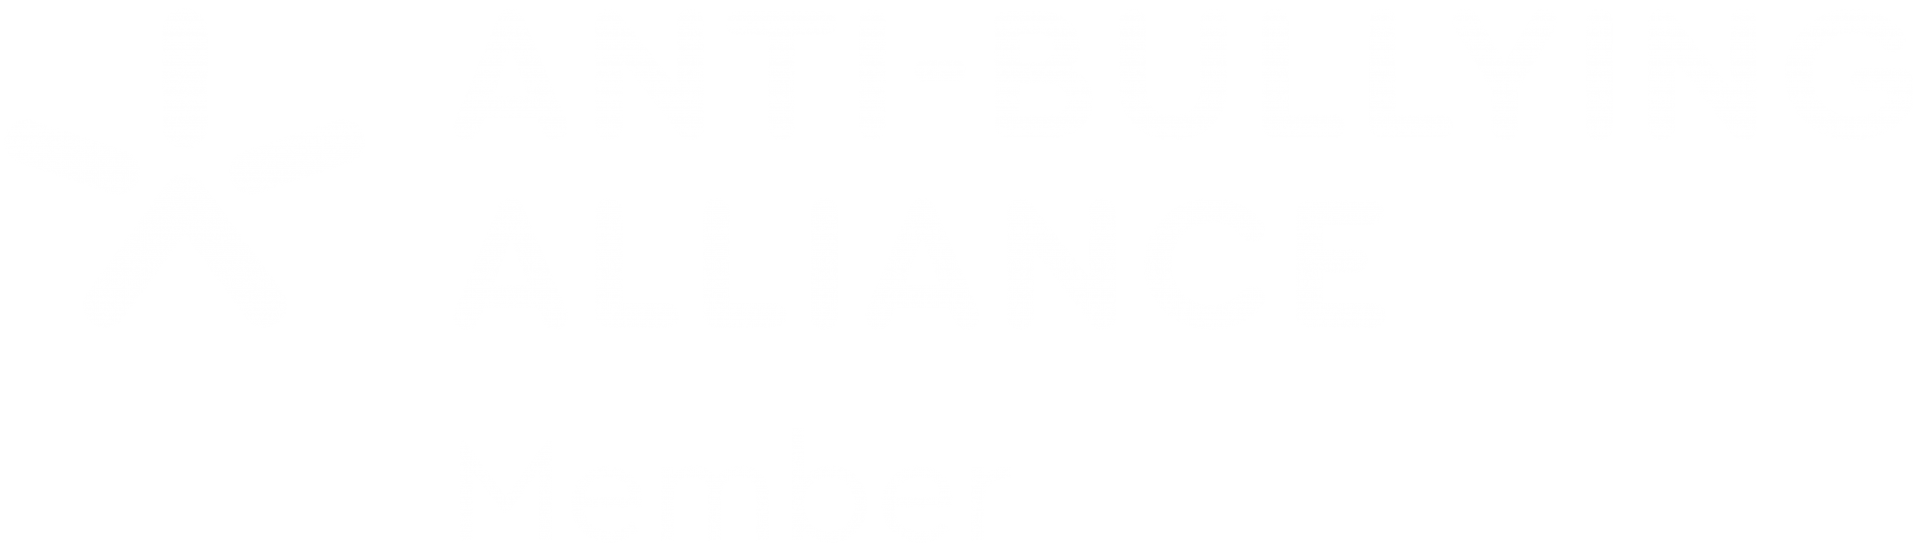 Anti-Bullying Alliance logo